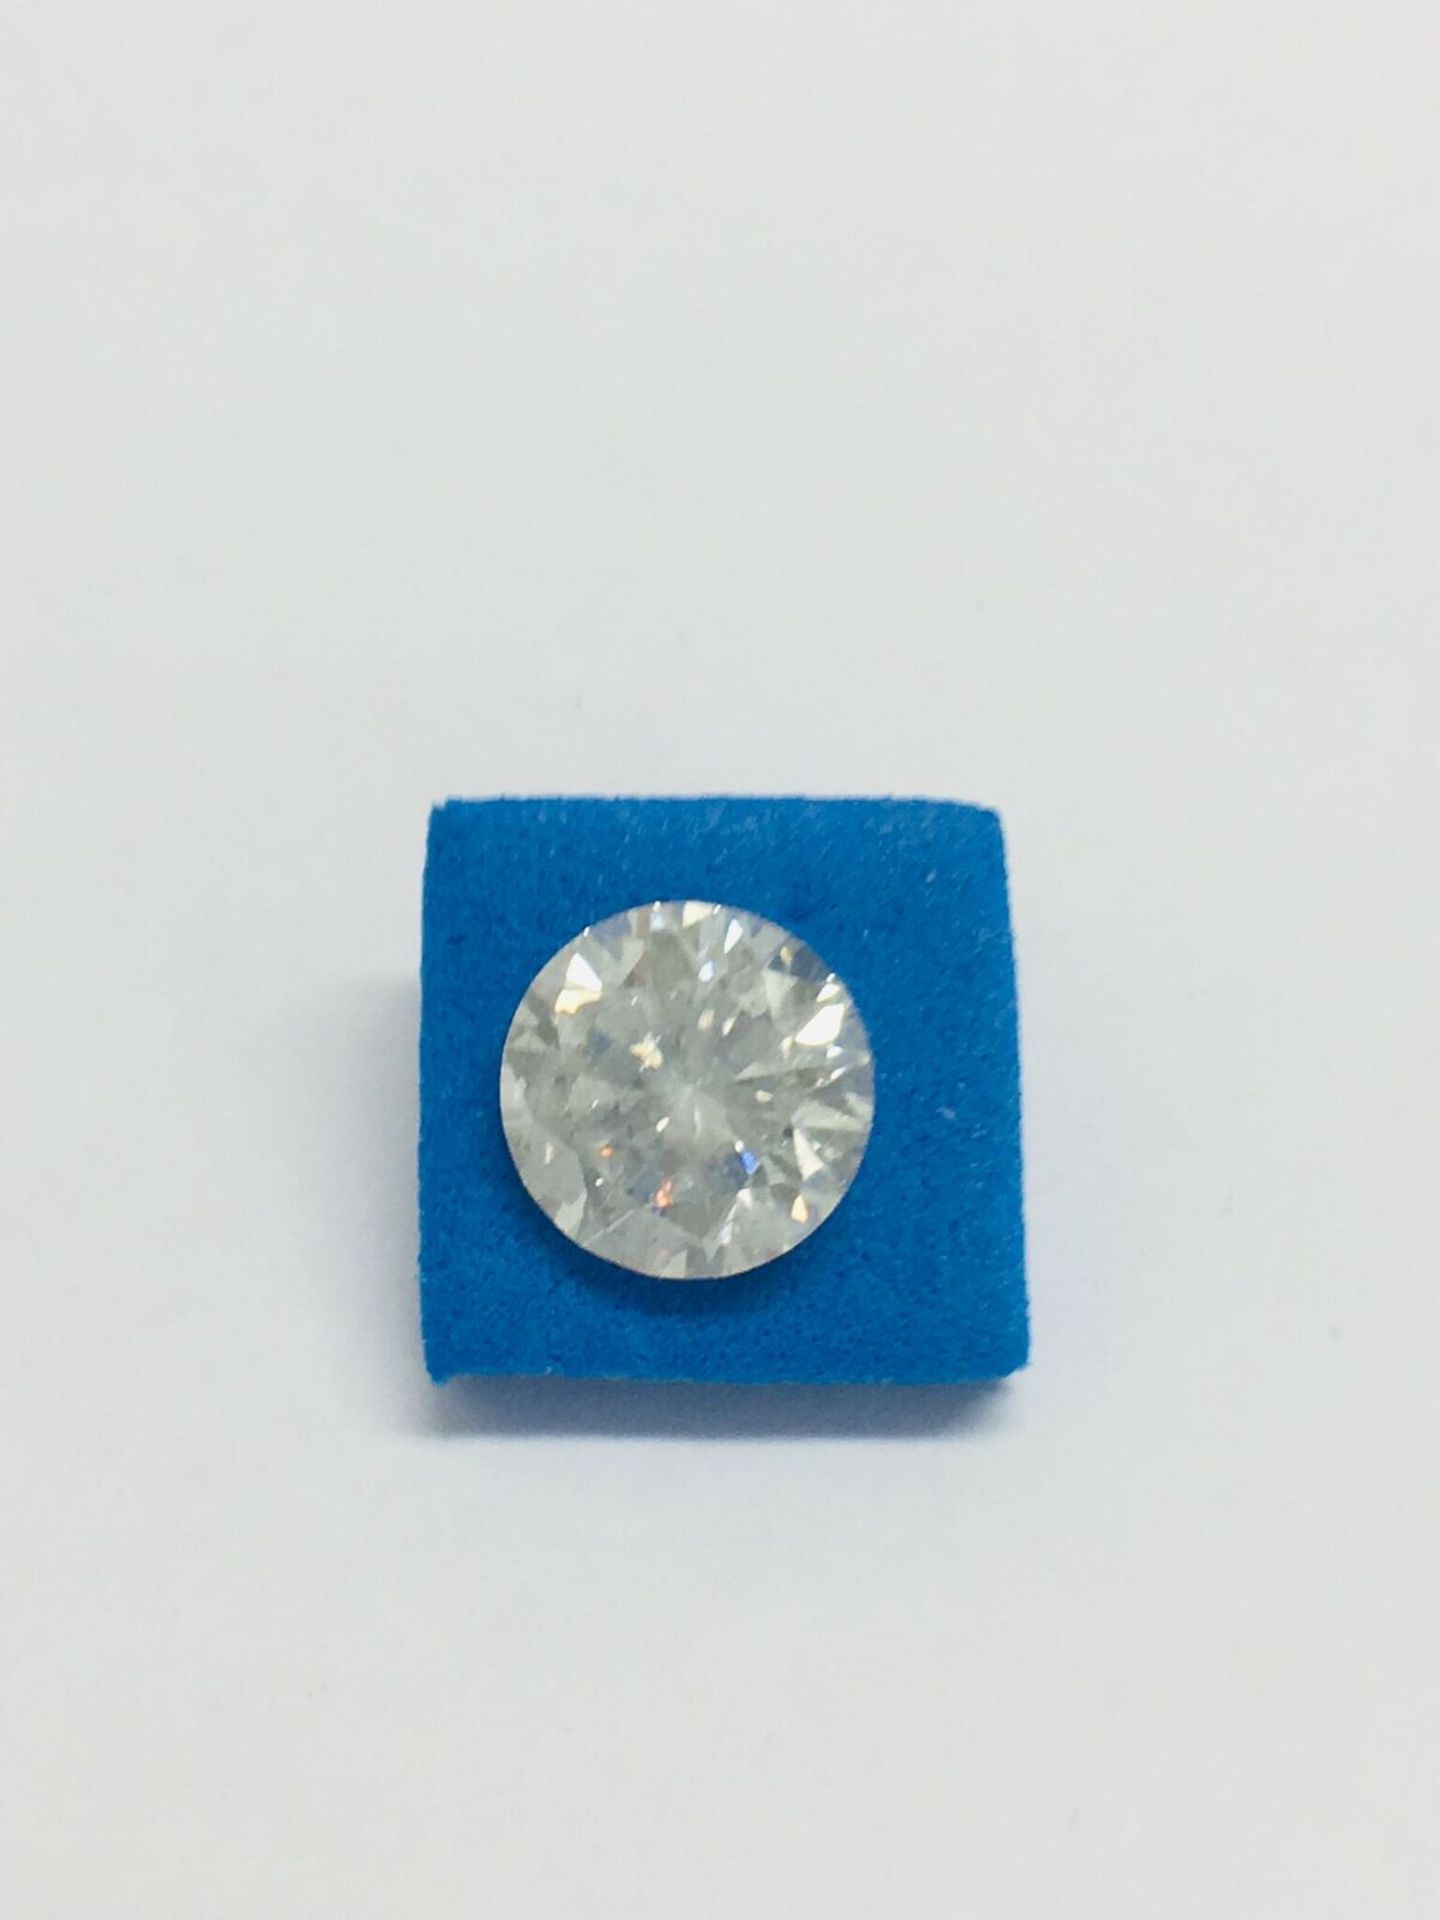 3.34ct Round Brilliant Cut Natural Diamond - Image 5 of 6